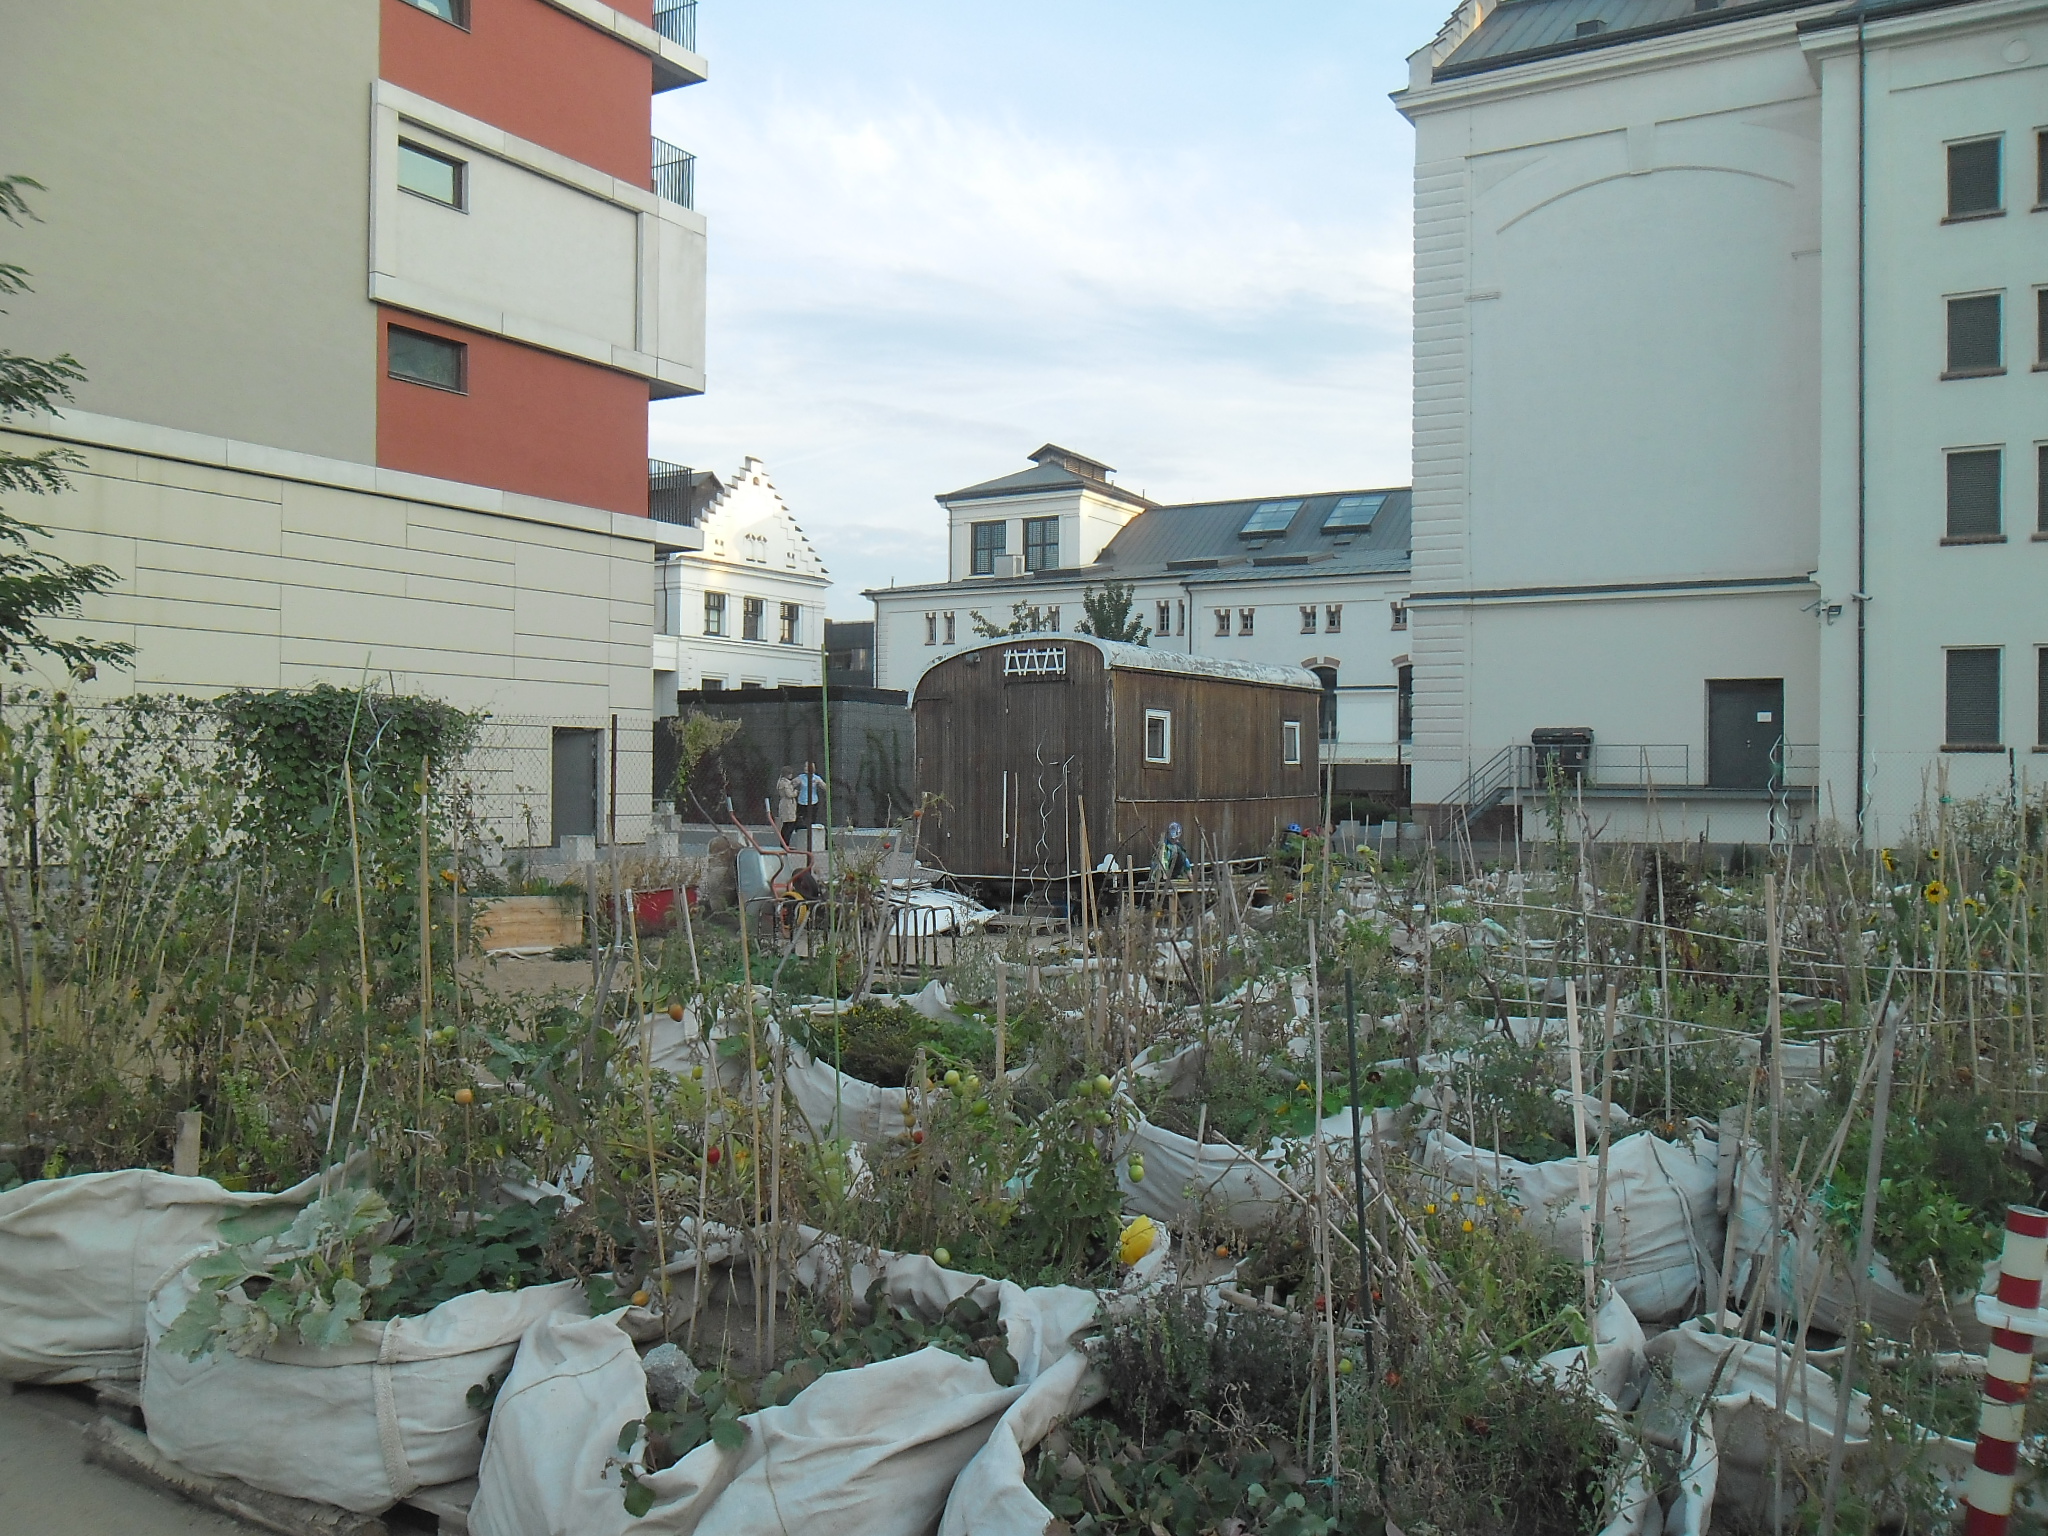 Urban gardening in Prague's district of Holesovice